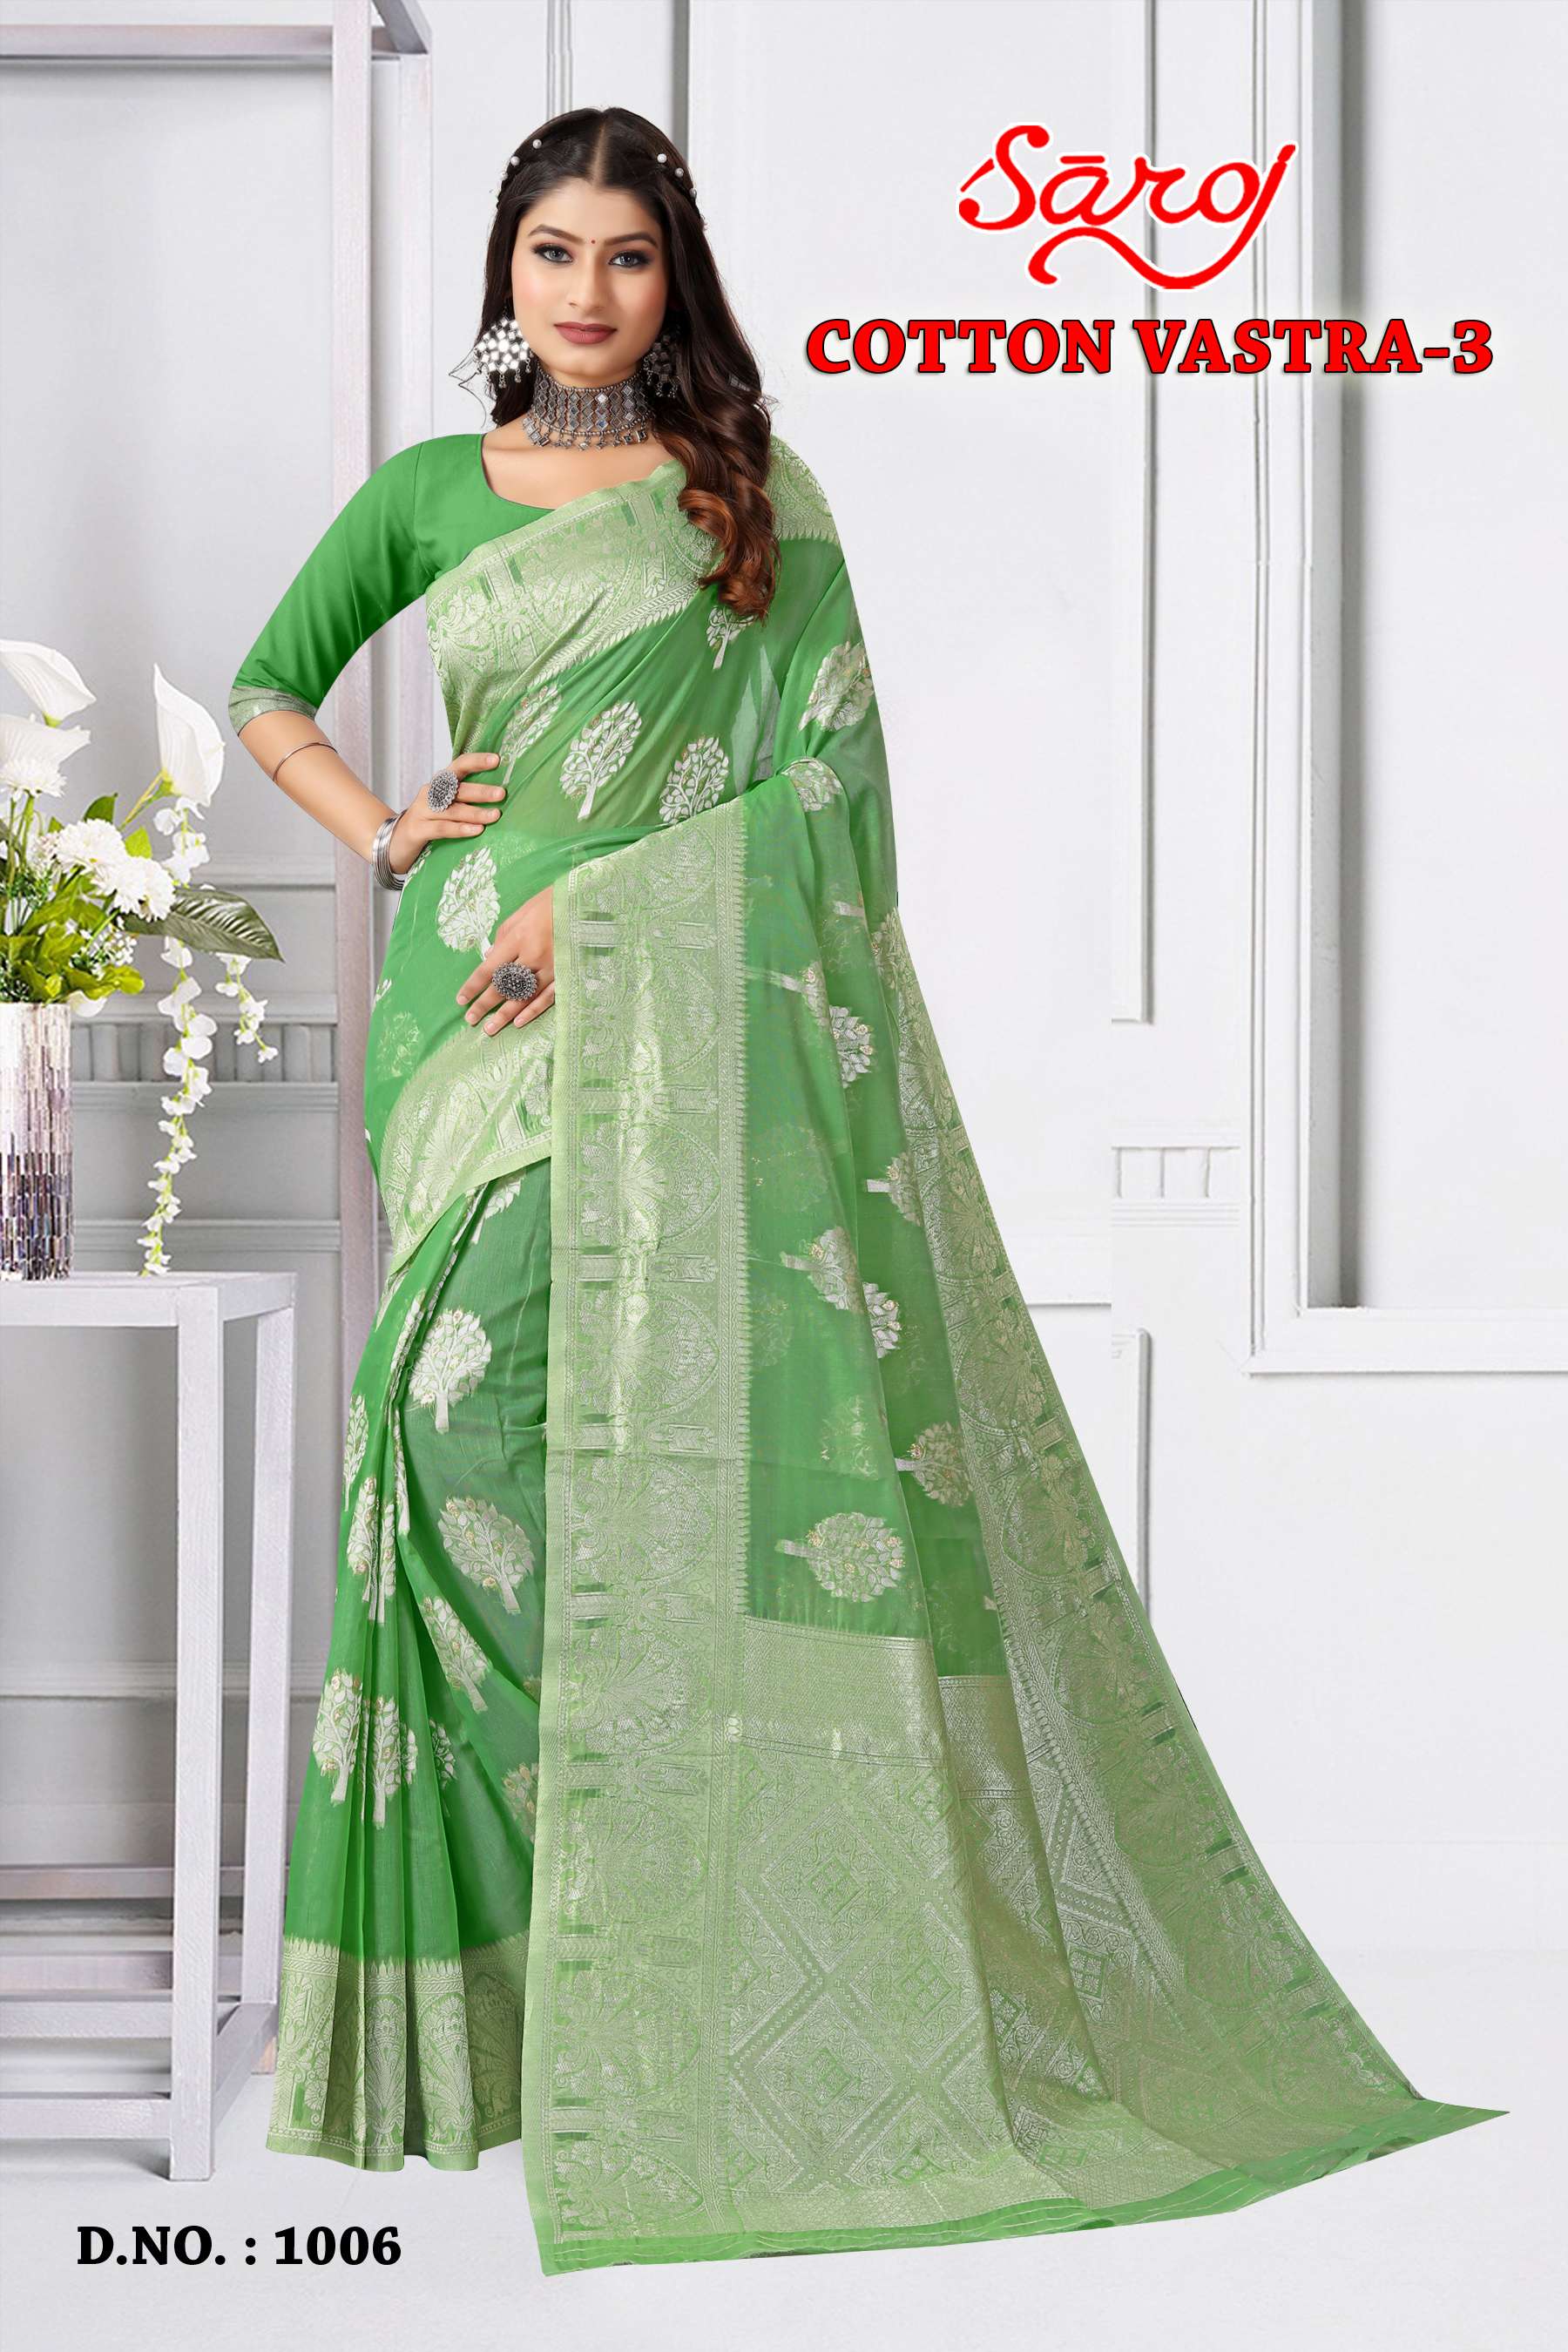 saroj textile presents Cotton vastra vol 3 banarasi sarees catalogue